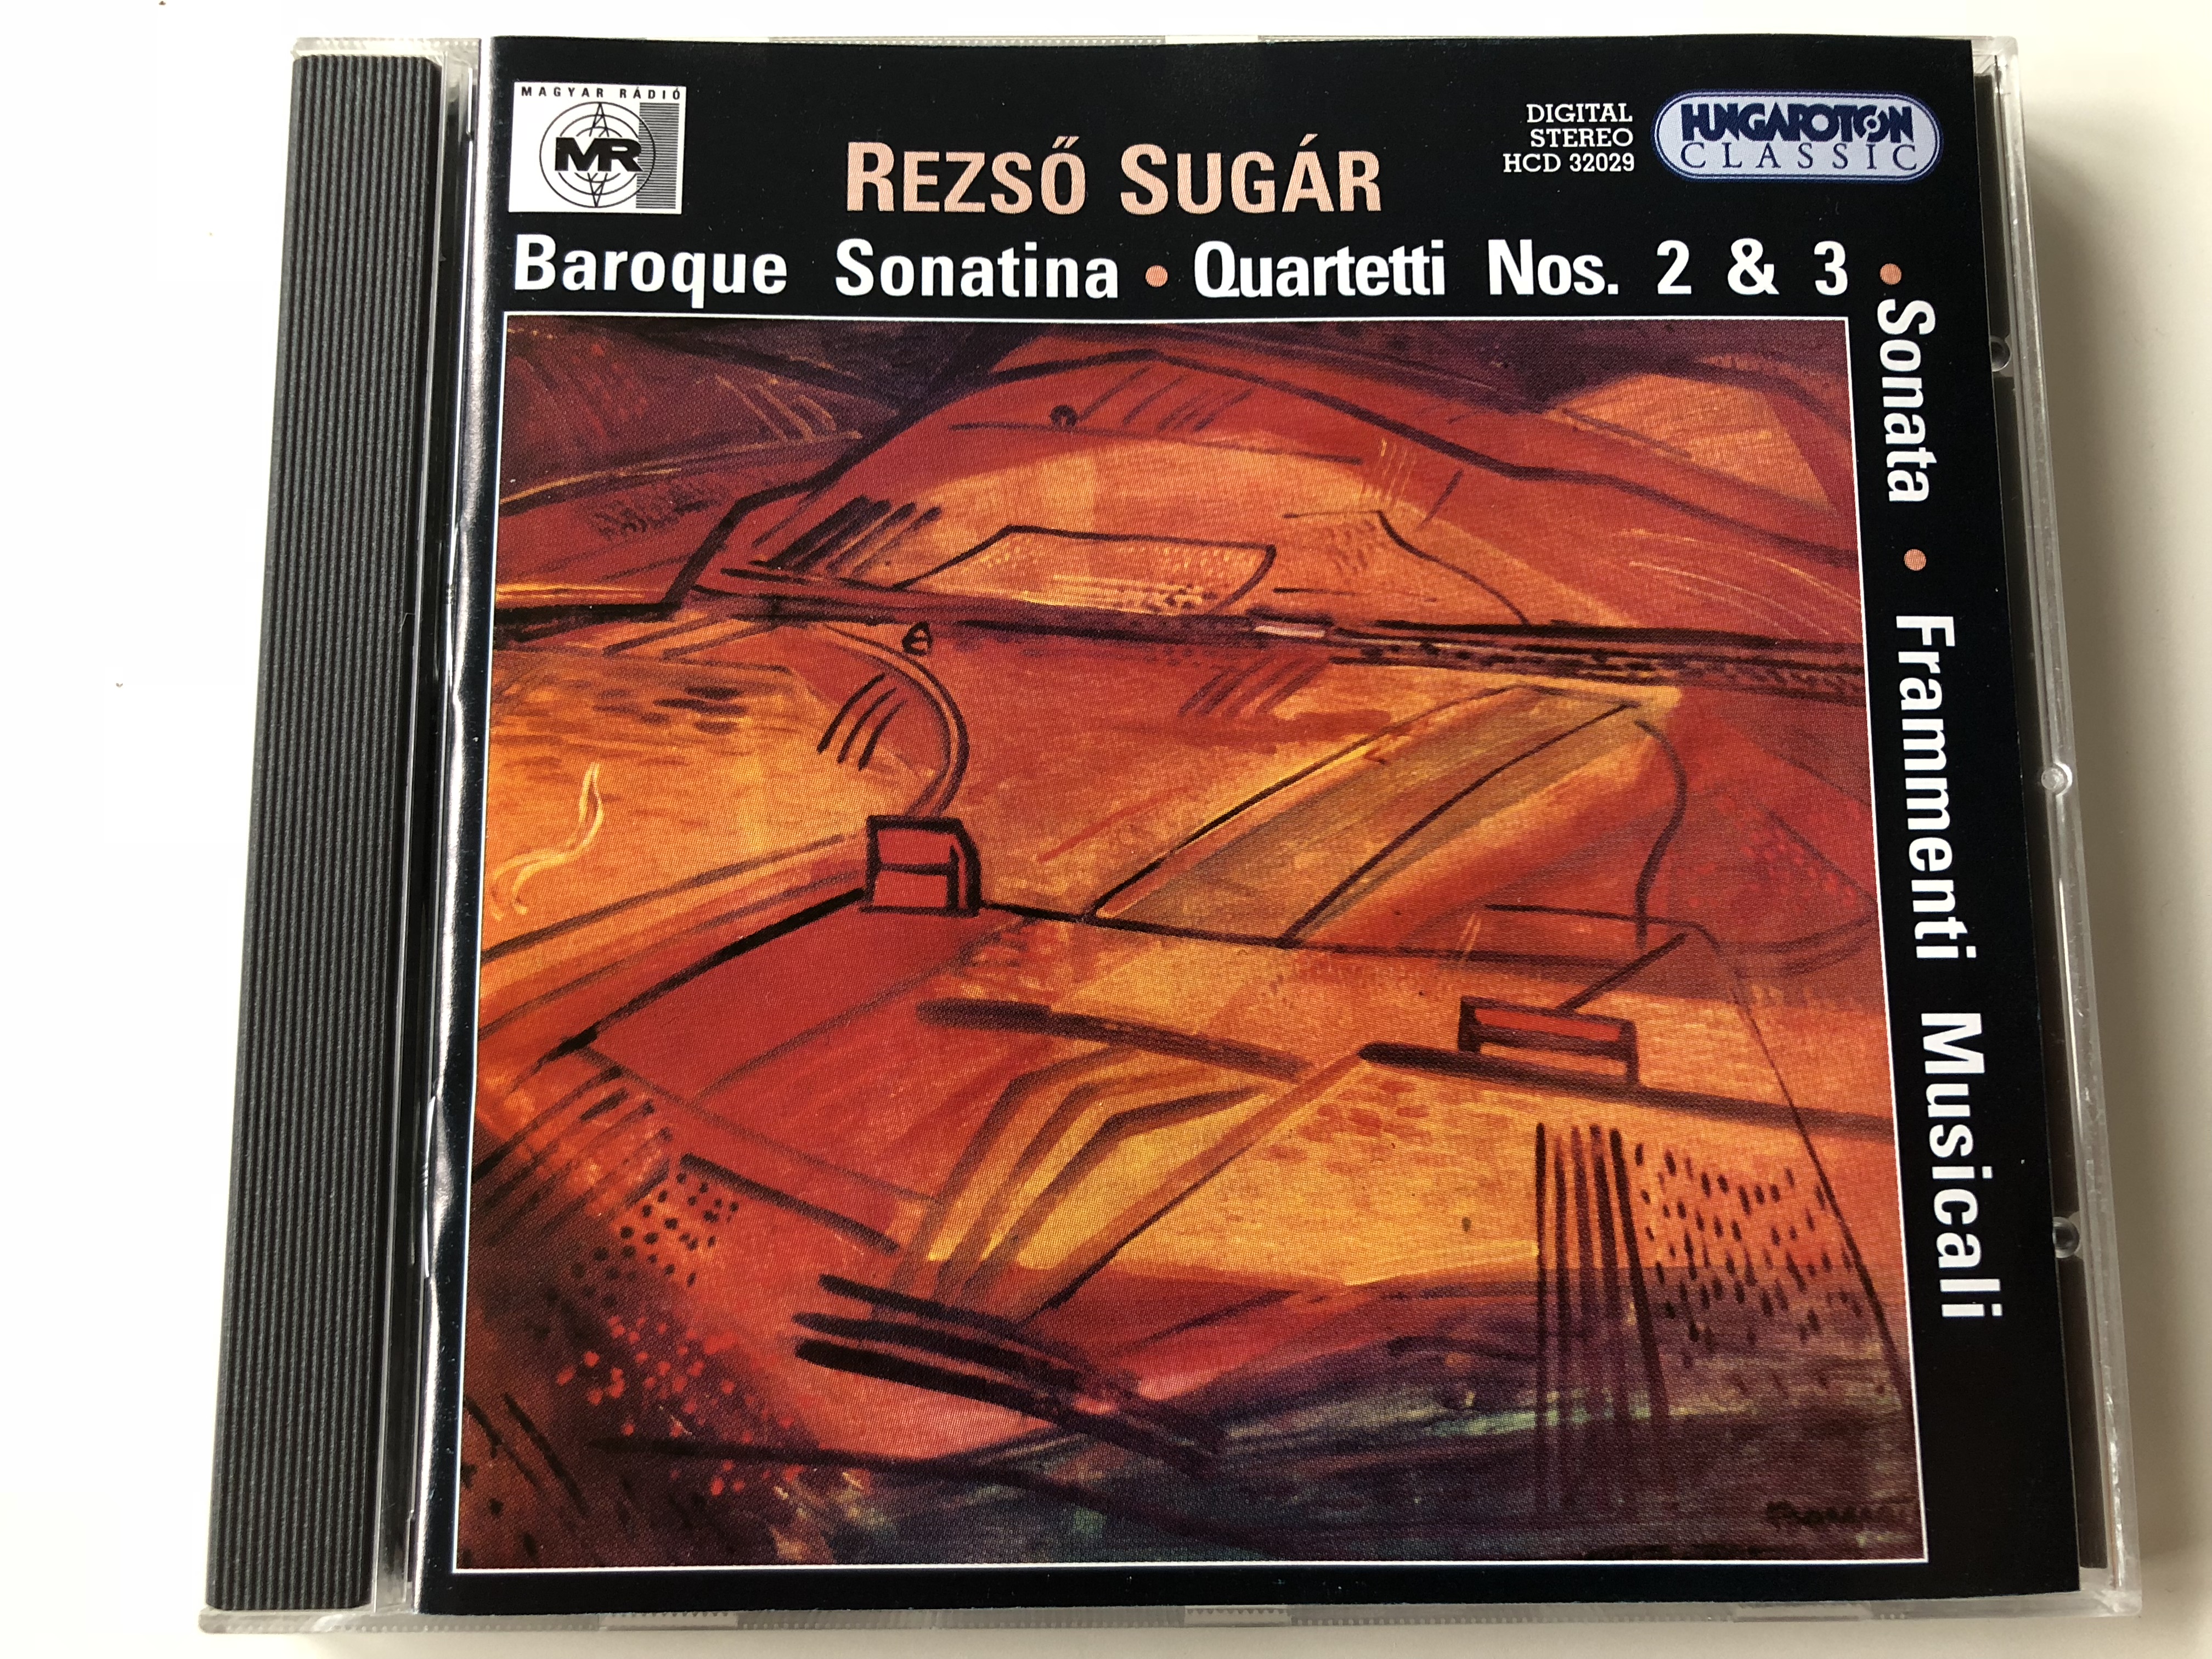 rezs-sug-r-baroque-sonatina-quartetti-nos.-2-3-sonata-frammenti-musicali-hungaroton-classic-audio-cd-2003-hcd-32029-1-.jpg